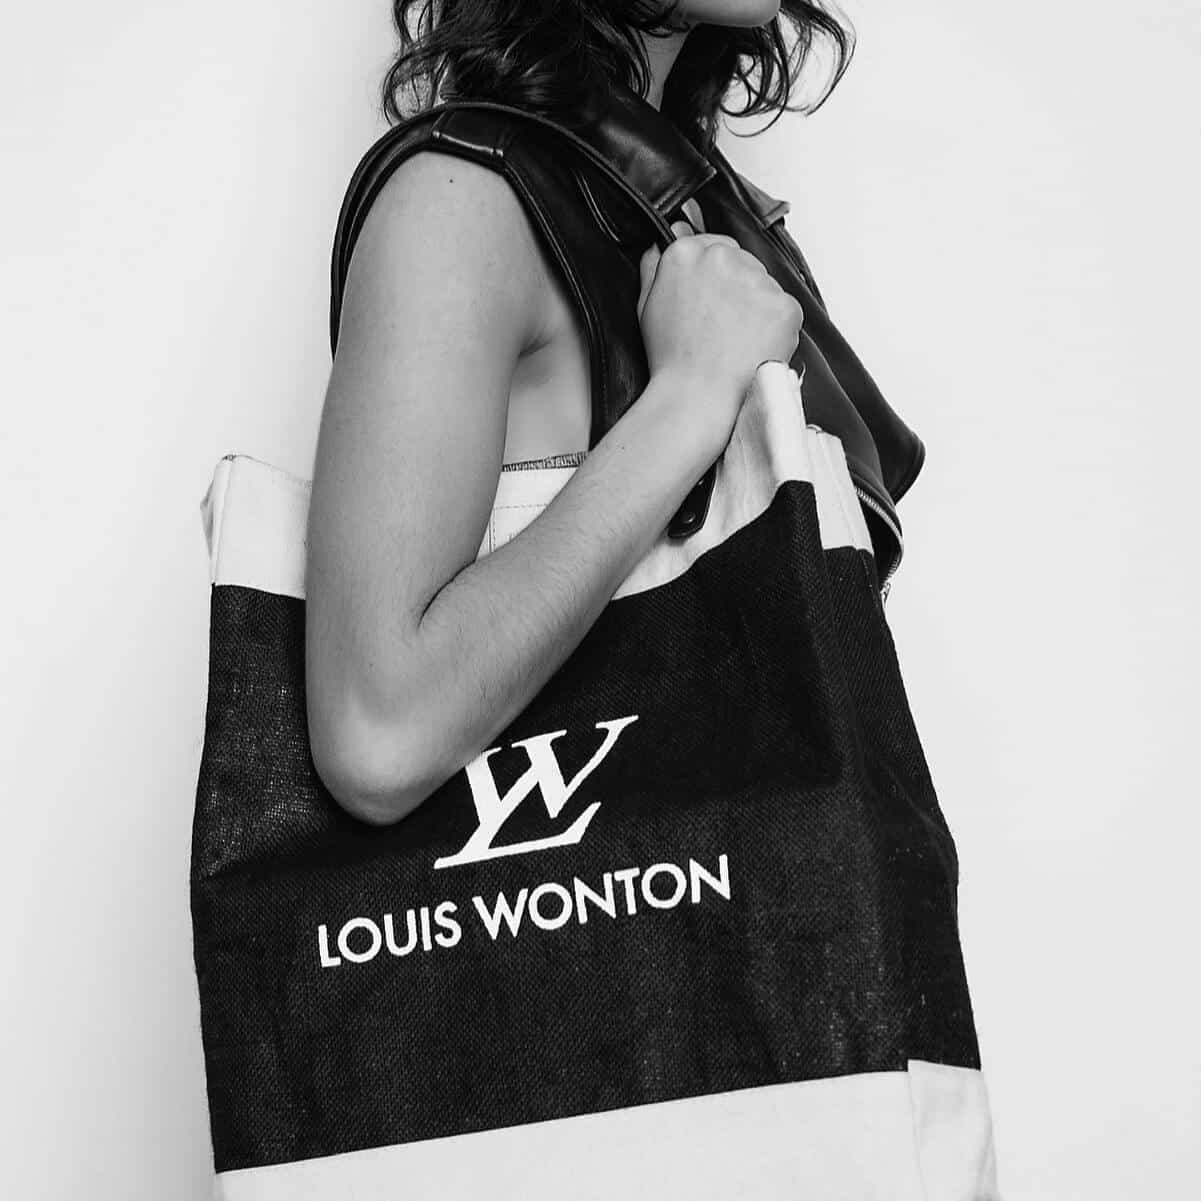 Louis Wonton Luxury Funny Fake Brand Tote Bag for Market 